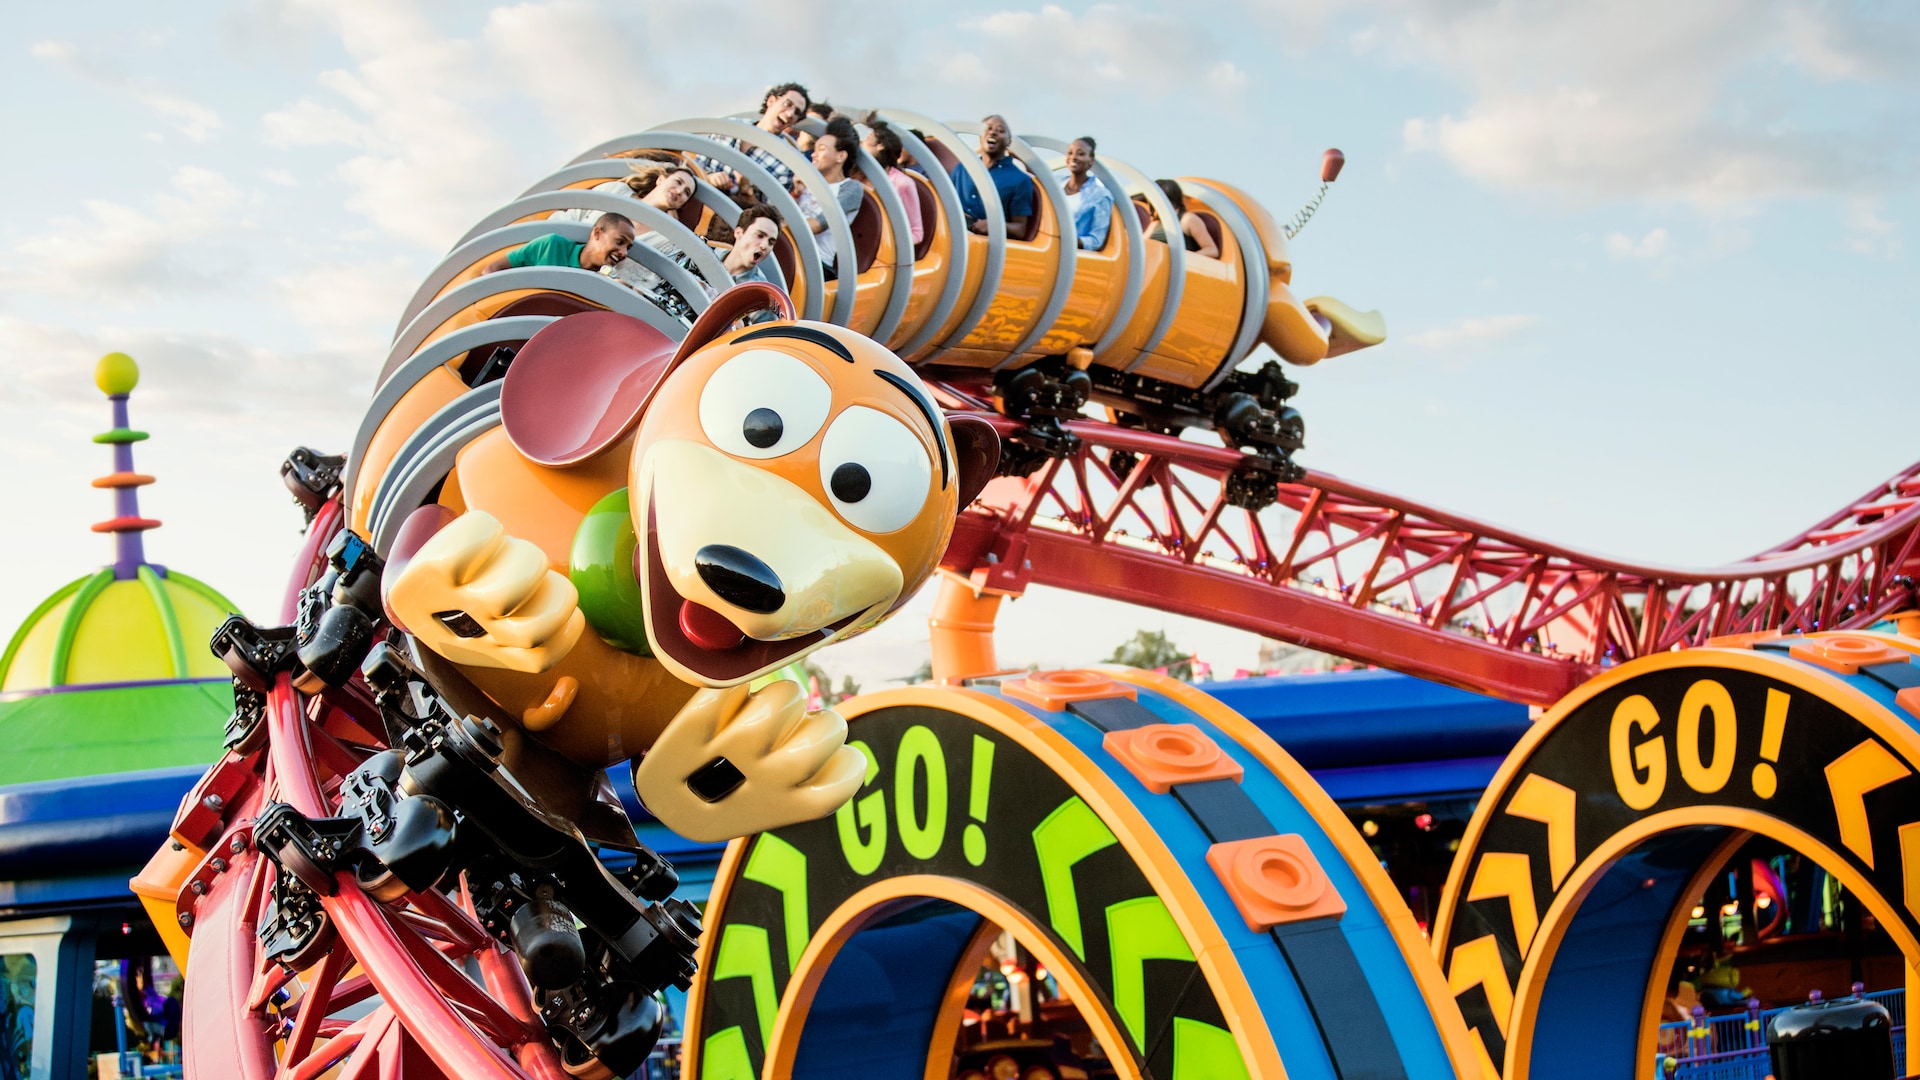 Slinky Dog Dash inside Toy Story Land